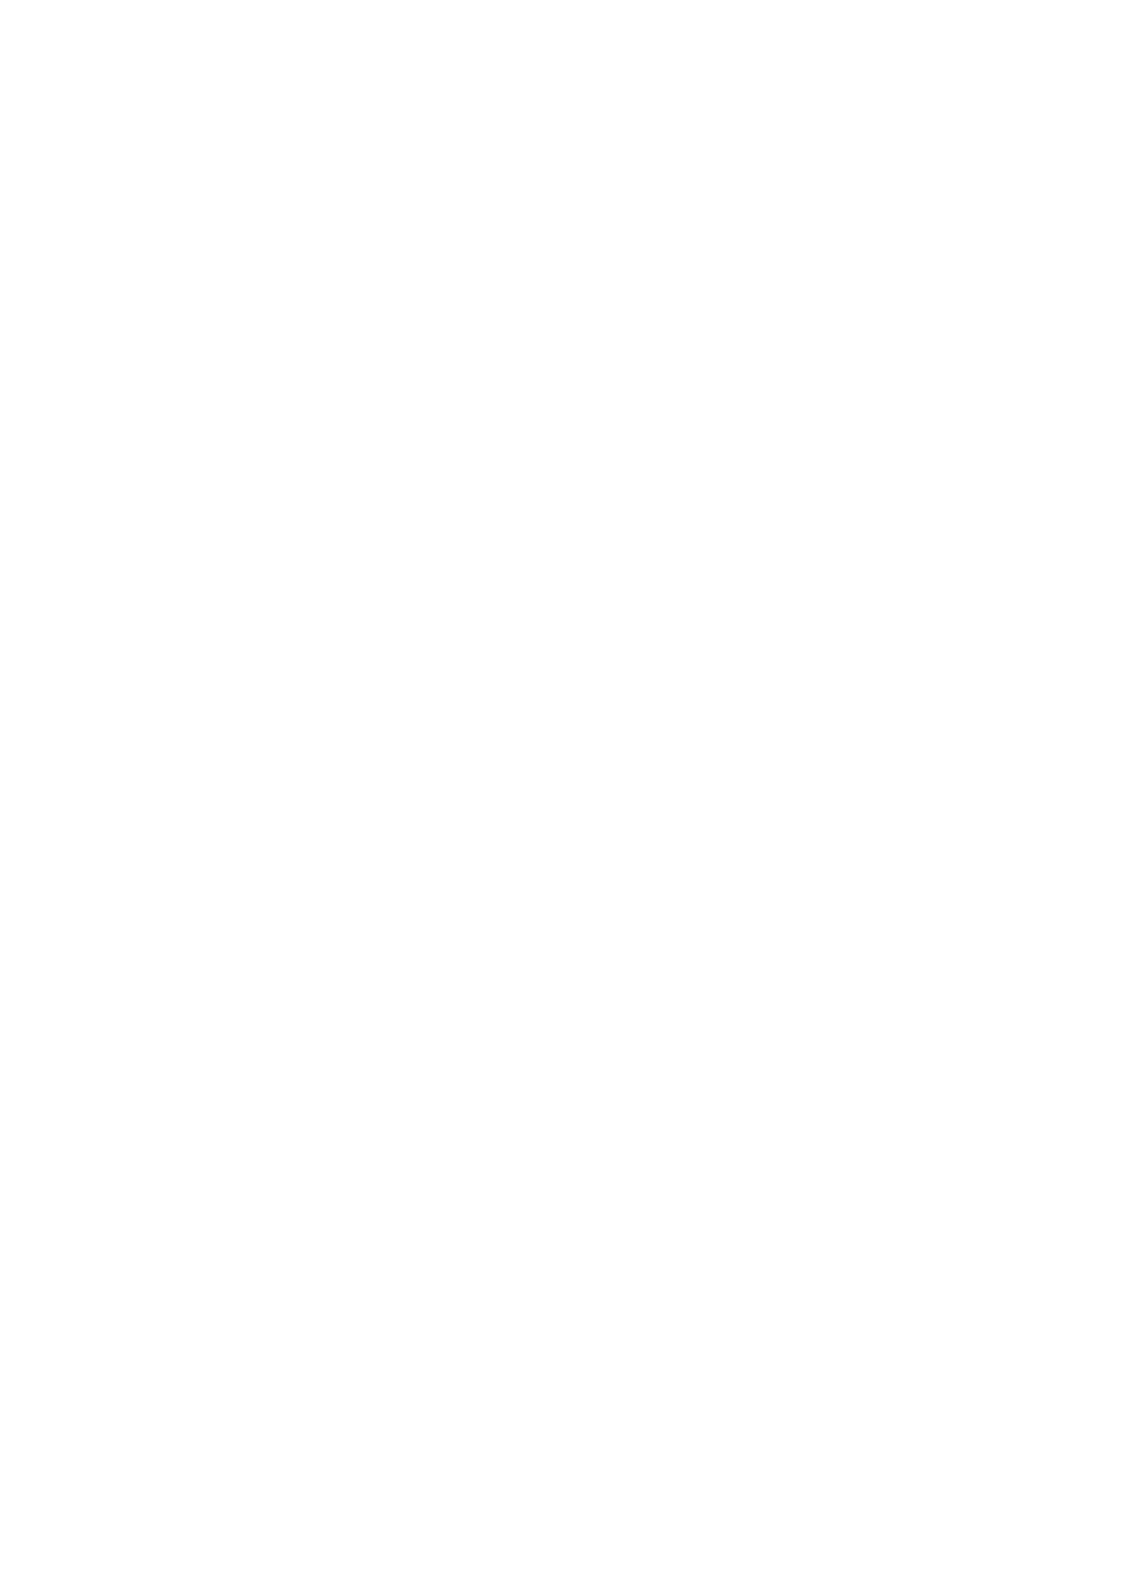 Nordstrom logo pour fonds sombres (PNG transparent)